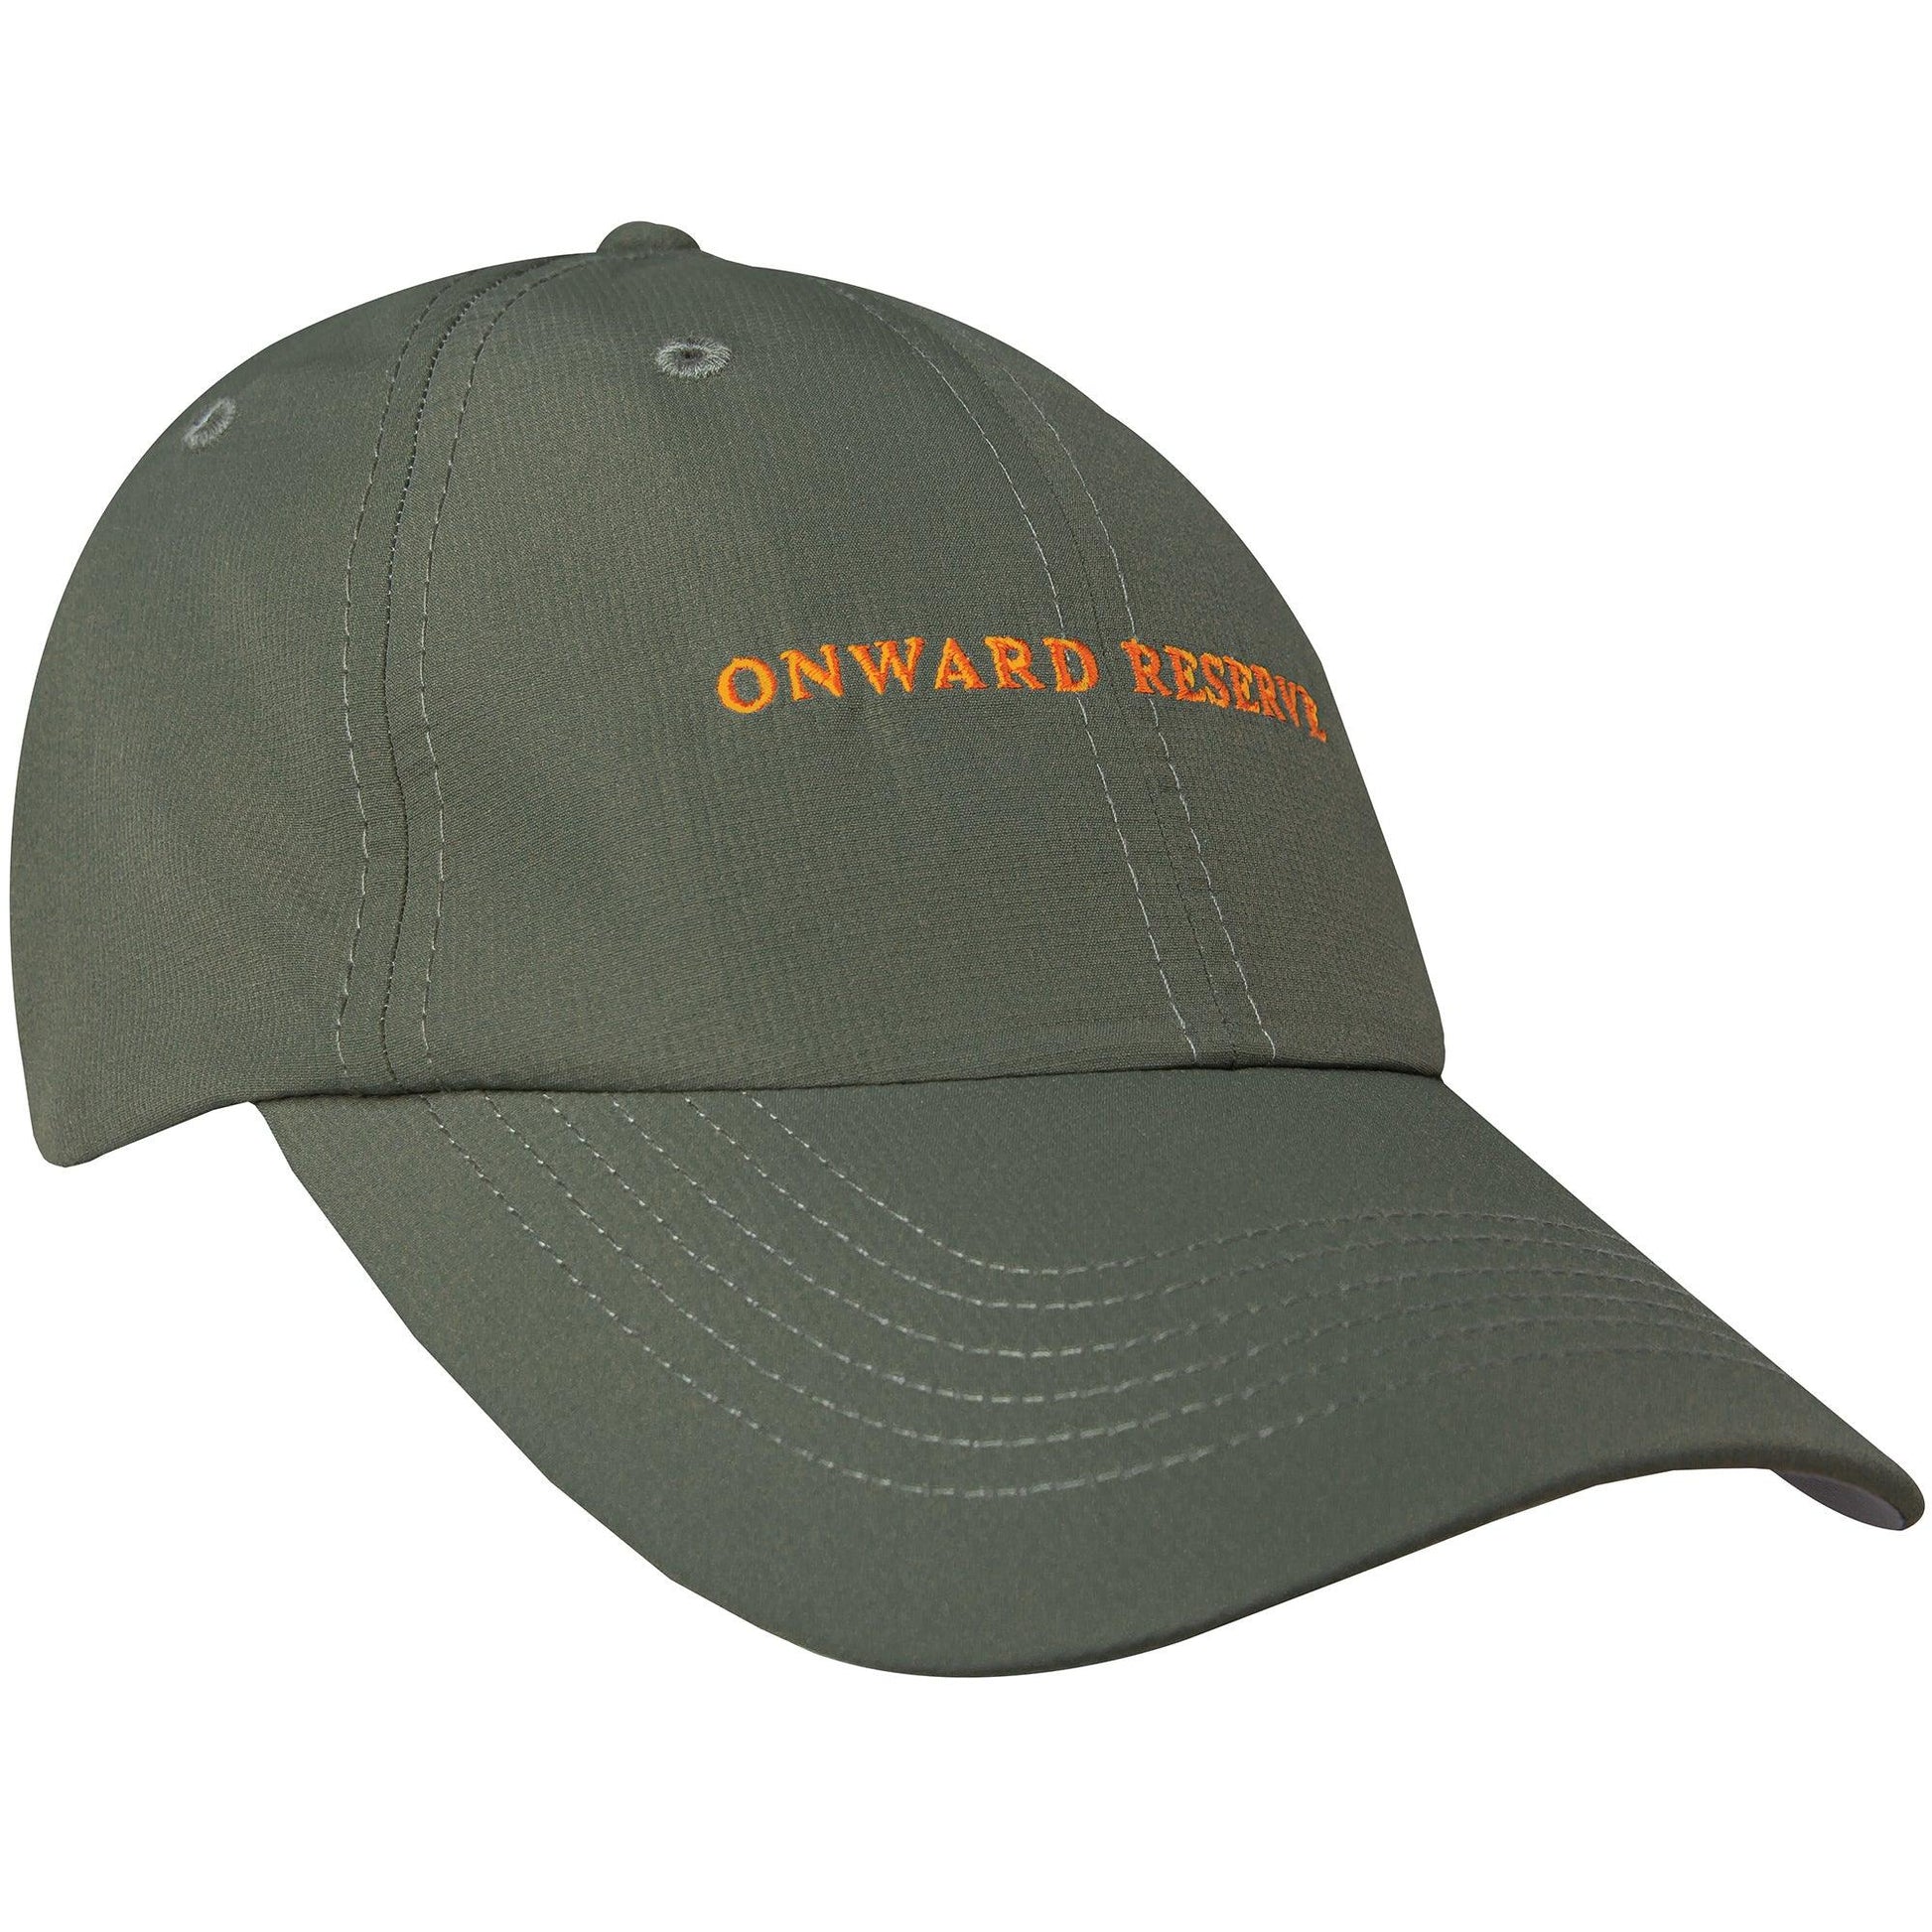 Onward Reserve Performance Hat - Onward Reserve